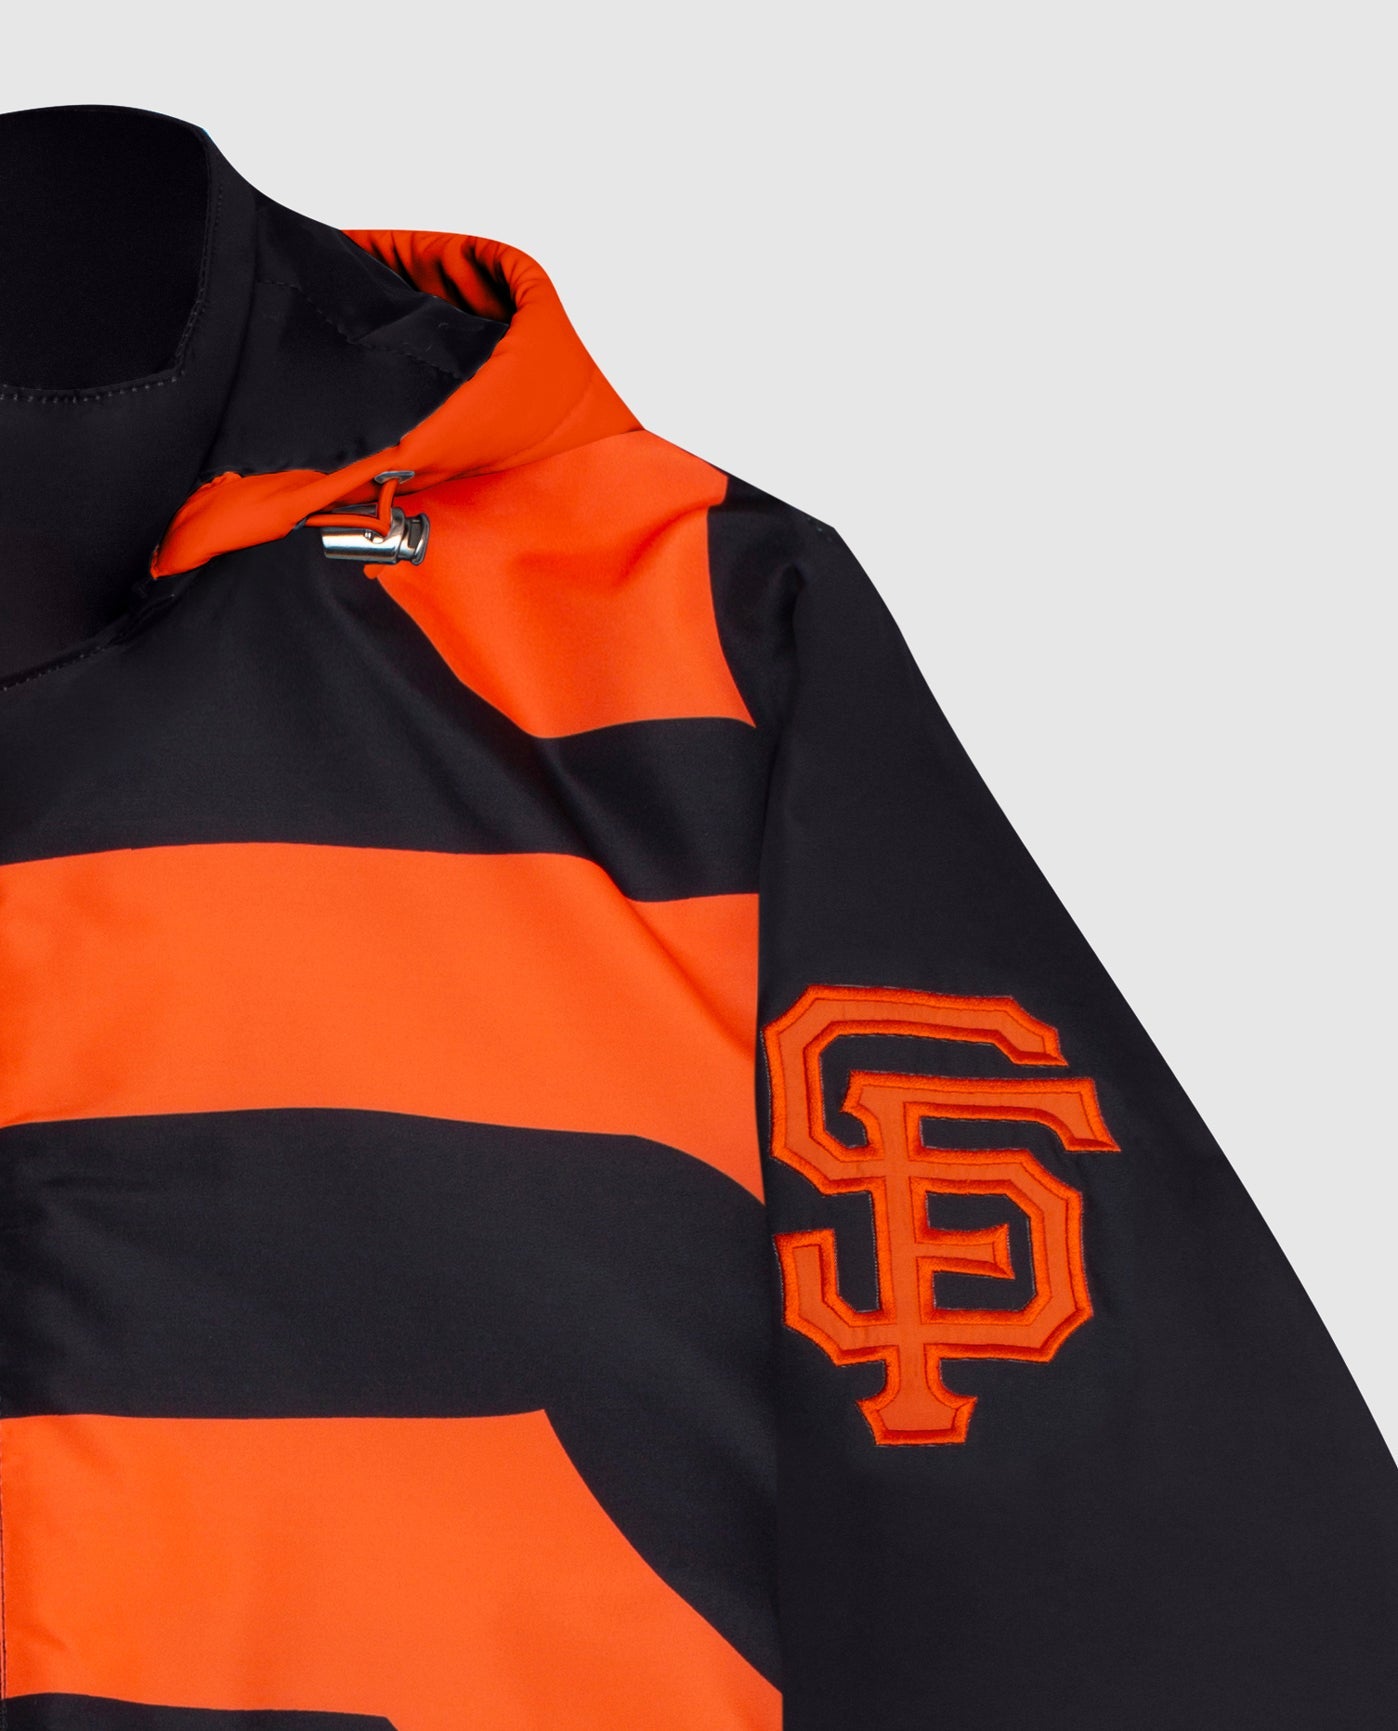 San Francisco Giants Nike Jersey Button-Up Hoodie - Black